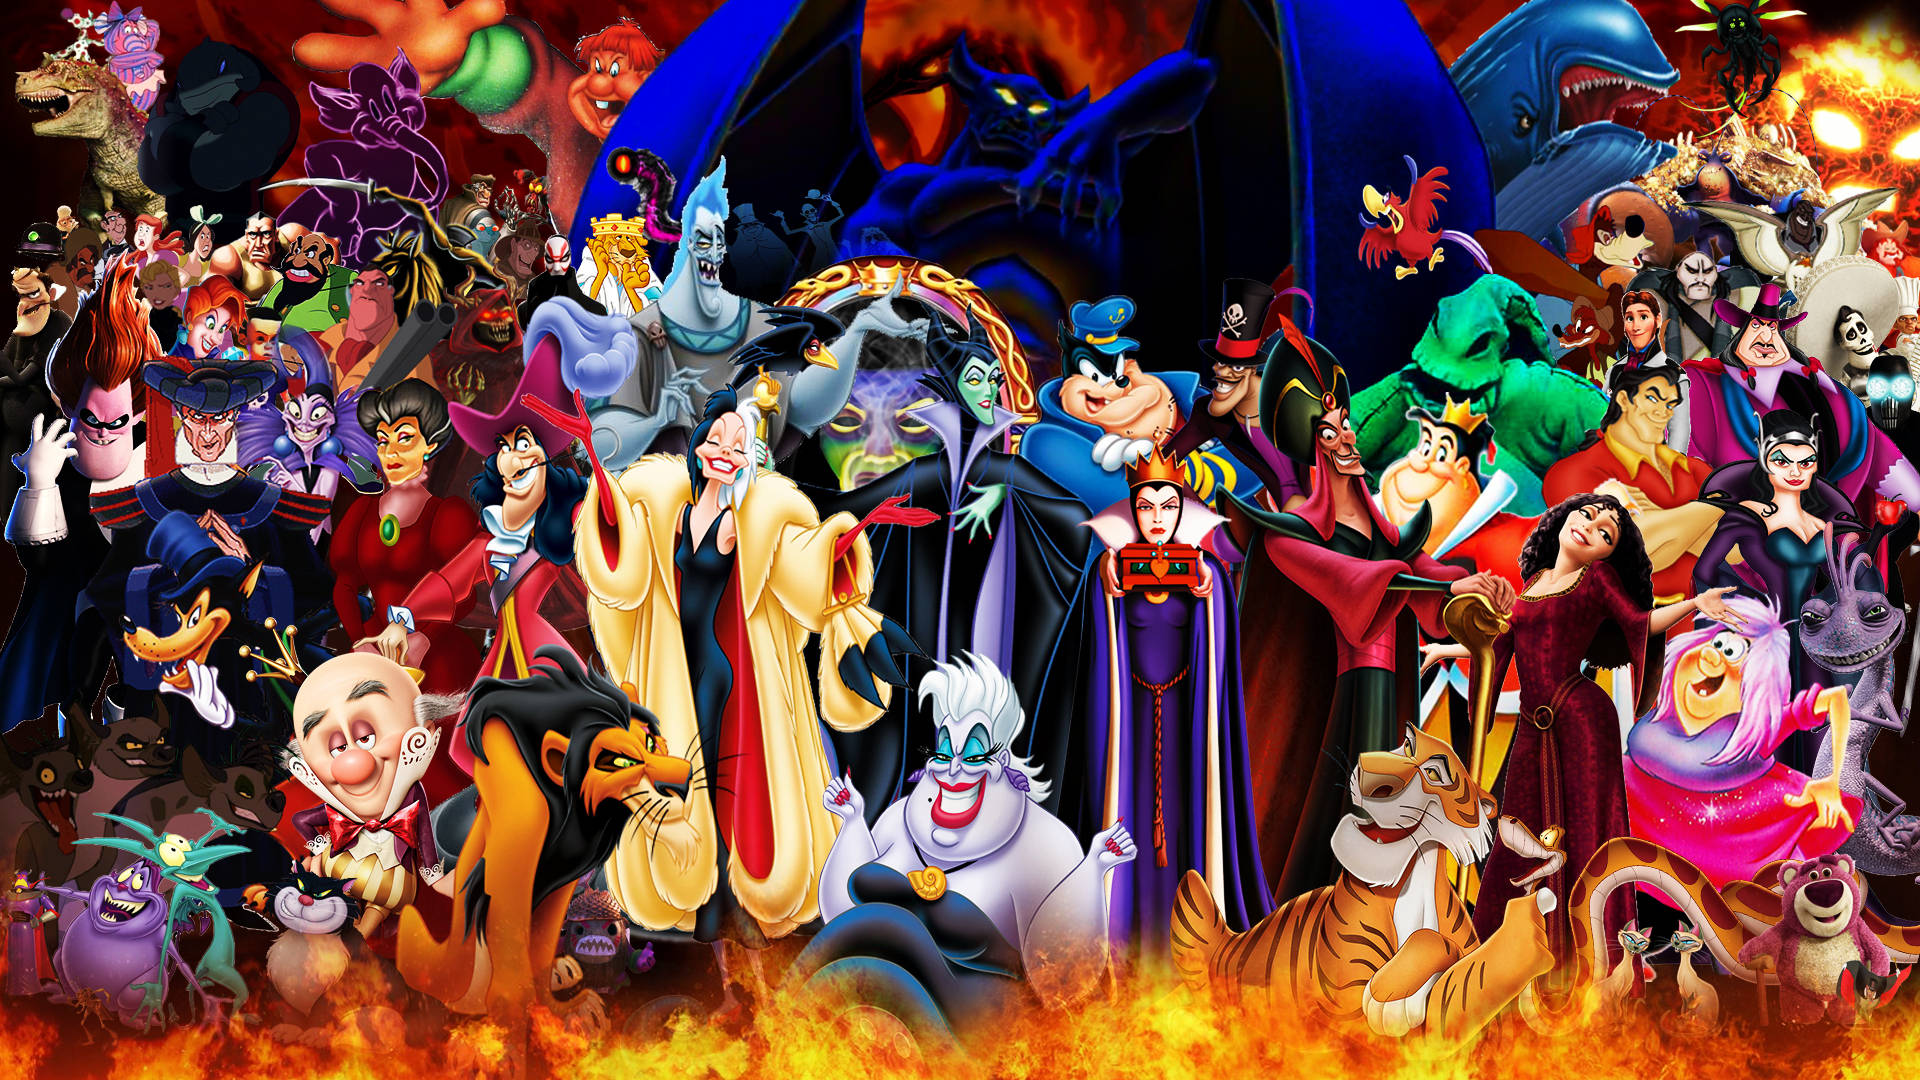 Disney Villains In Fire Background